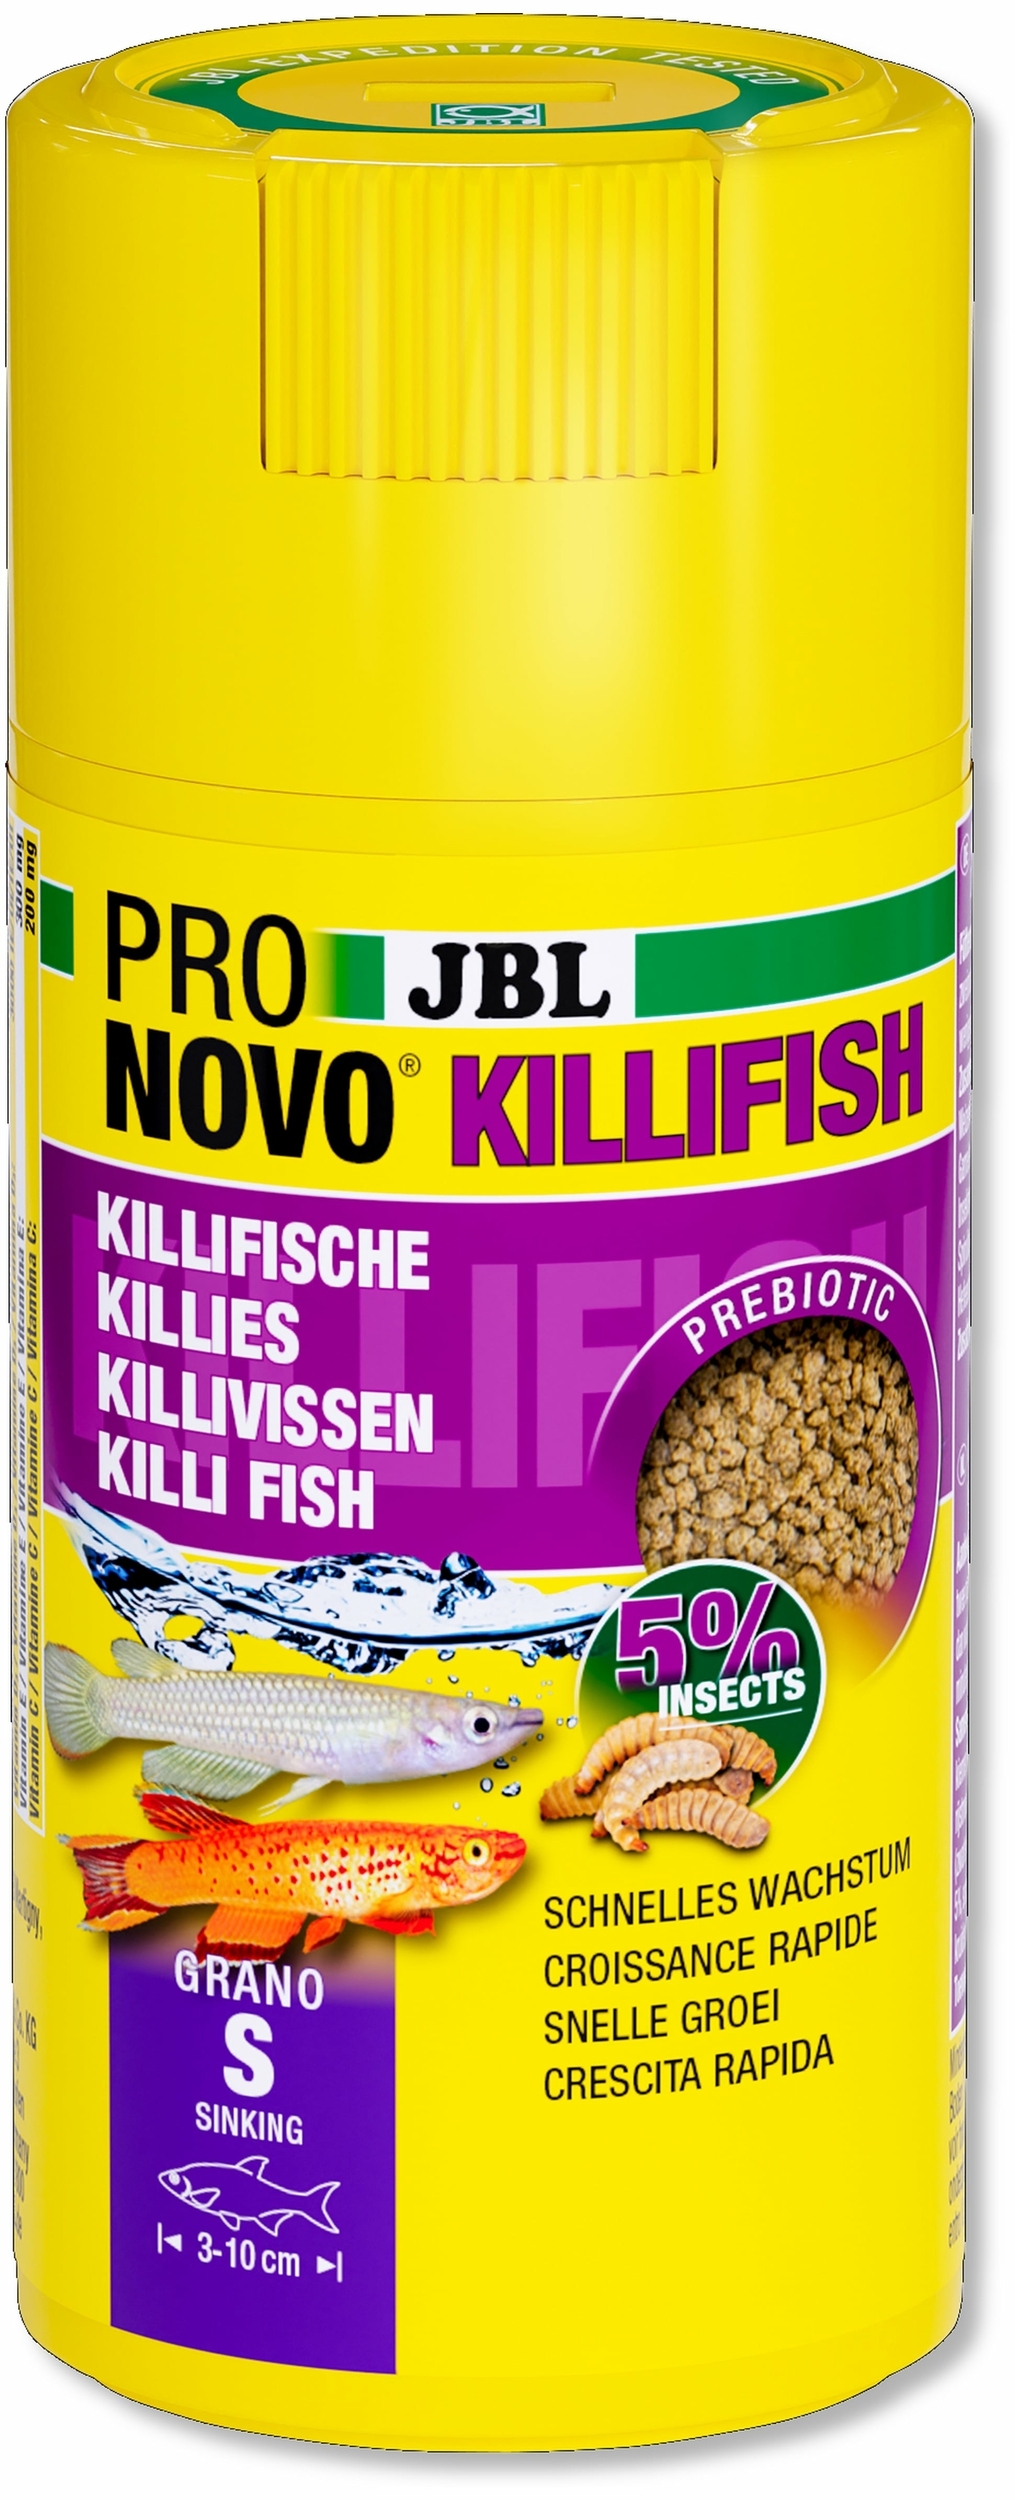 jbl-pronovo-killifish-grano-s-100-ml-click-nourriture-en-granules-pour-killies-de-3-a-10-cm-min